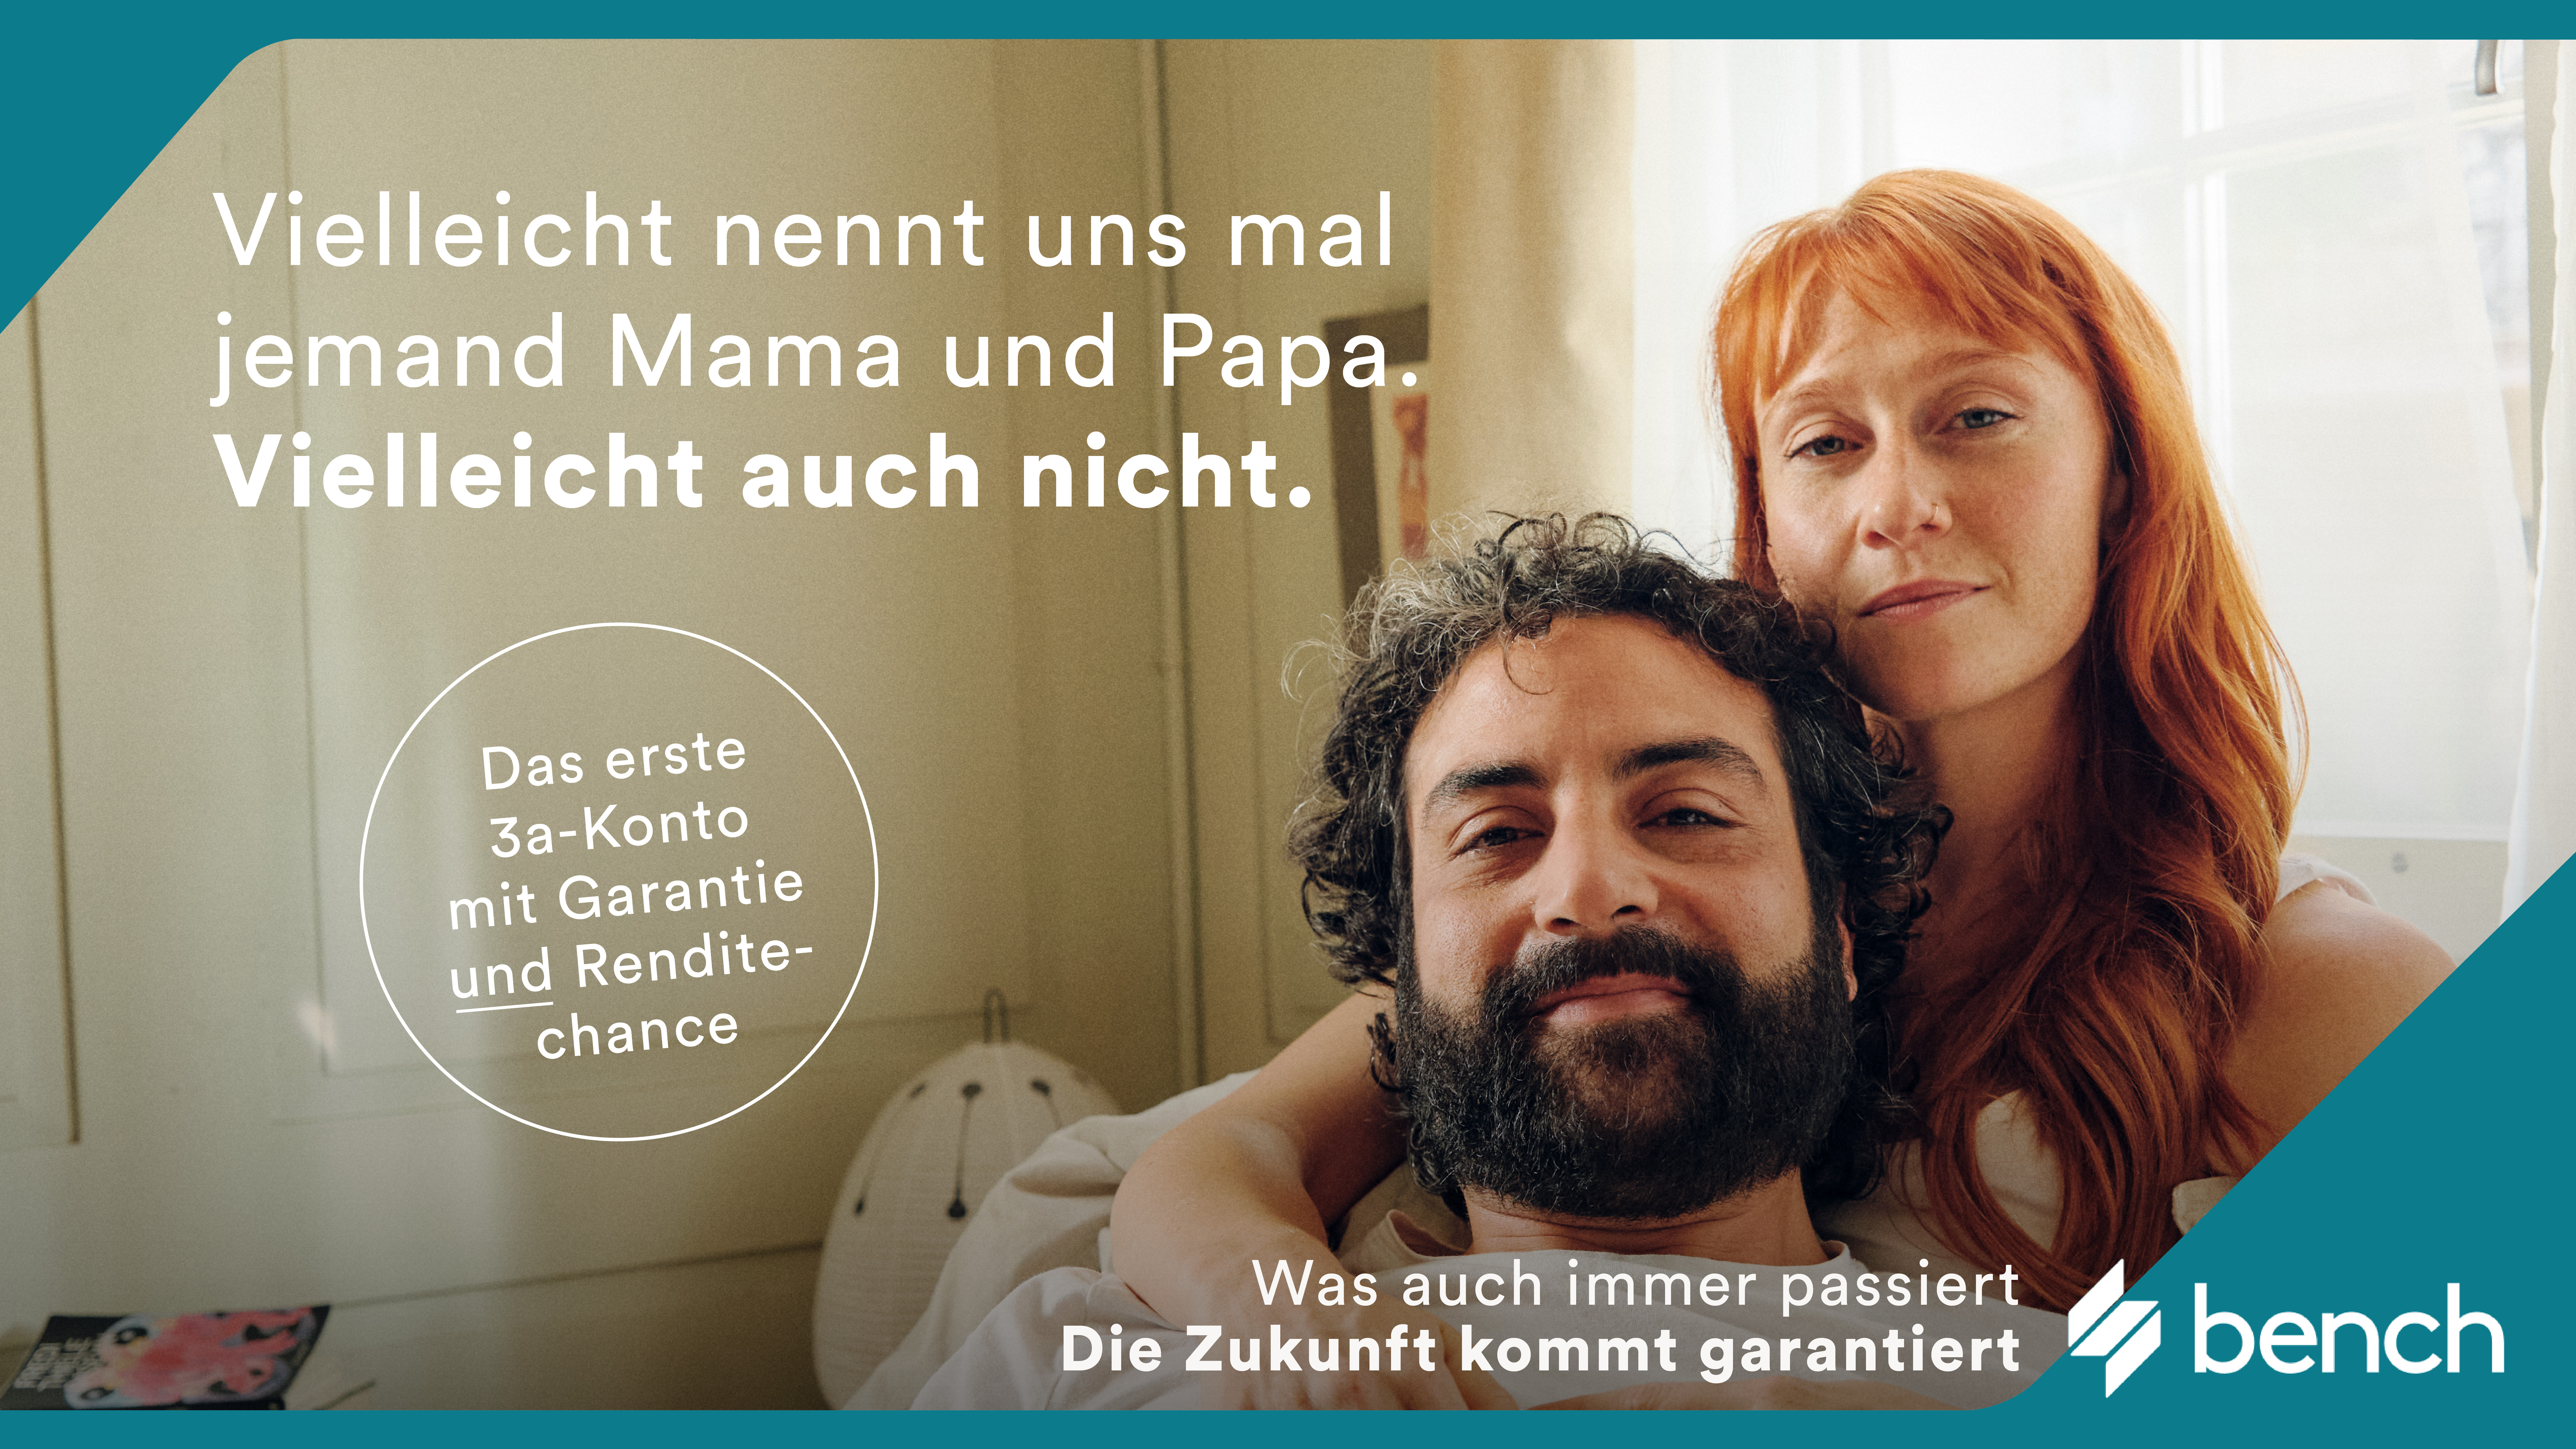 Rod-Kommunikation-Glarner-Kantonalbank_Bench_Mama-Papa